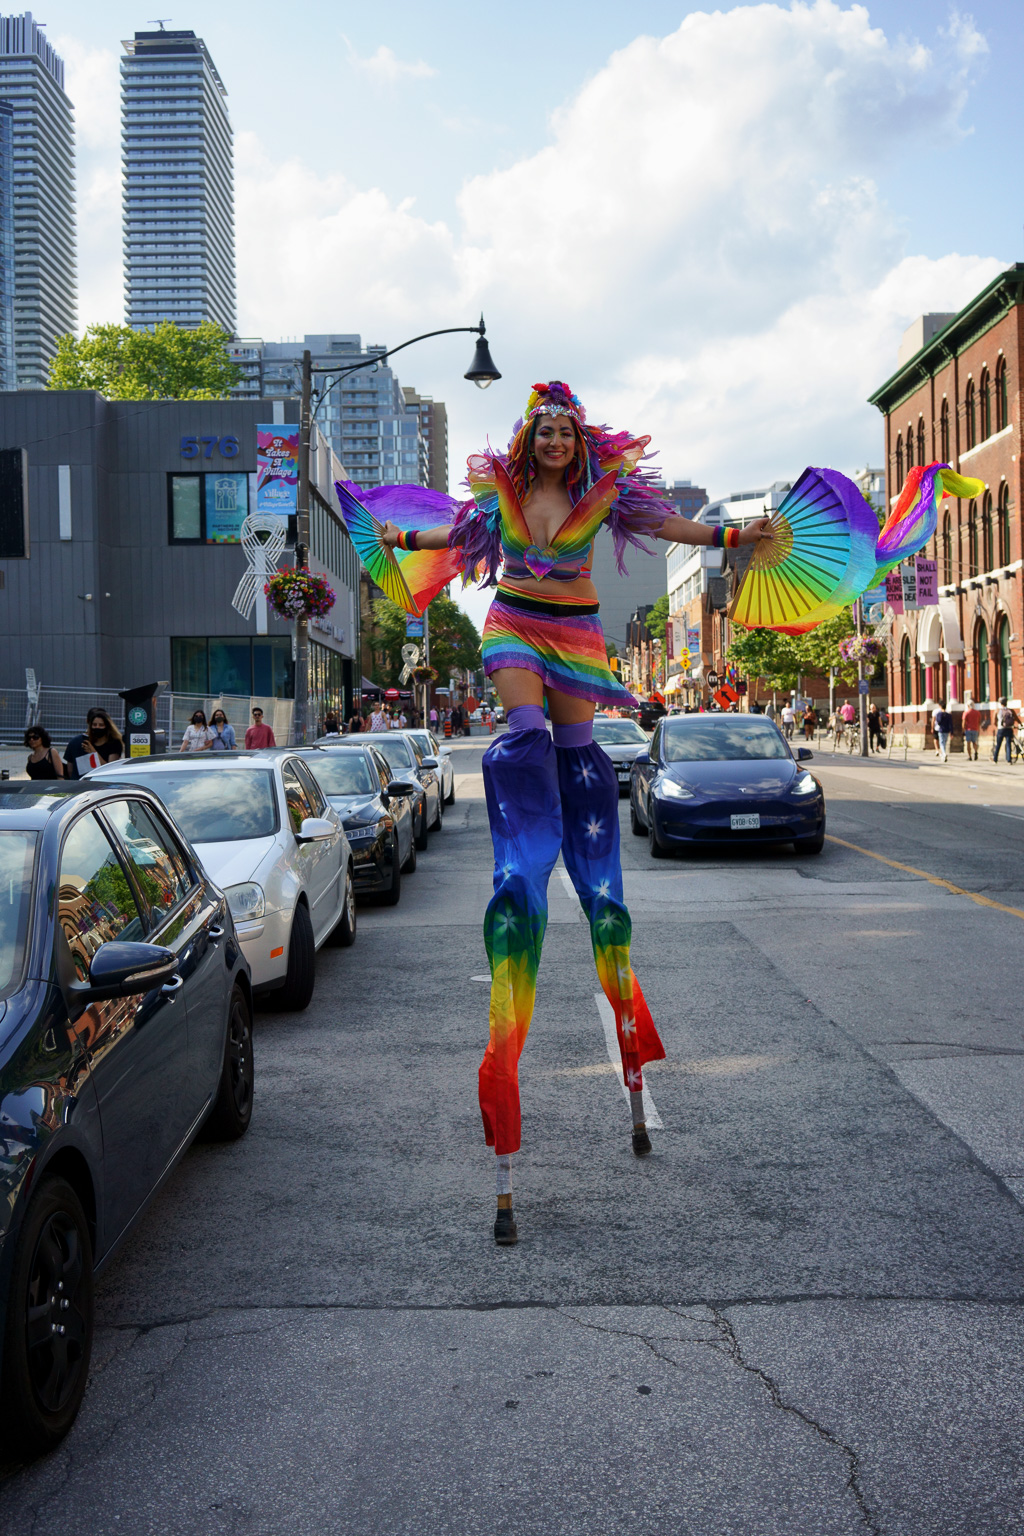 Walking on stilts down Toronto's Church Street in a rainbow dress.